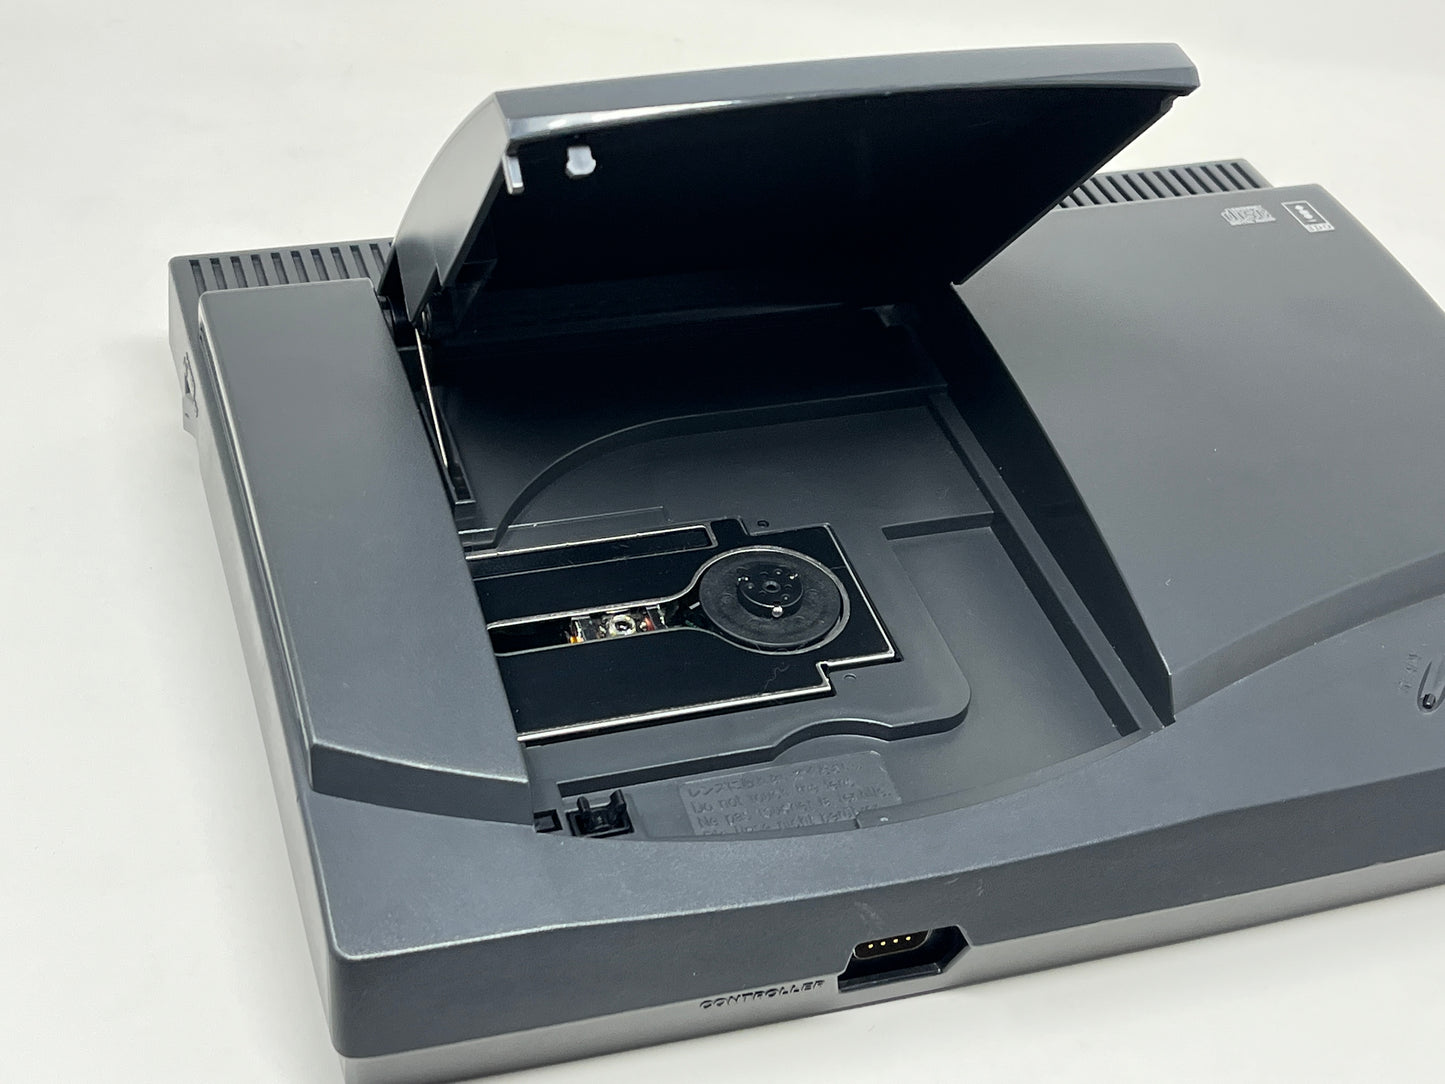 Panasonic REAL 3DO FZ-10 System w/ Controller